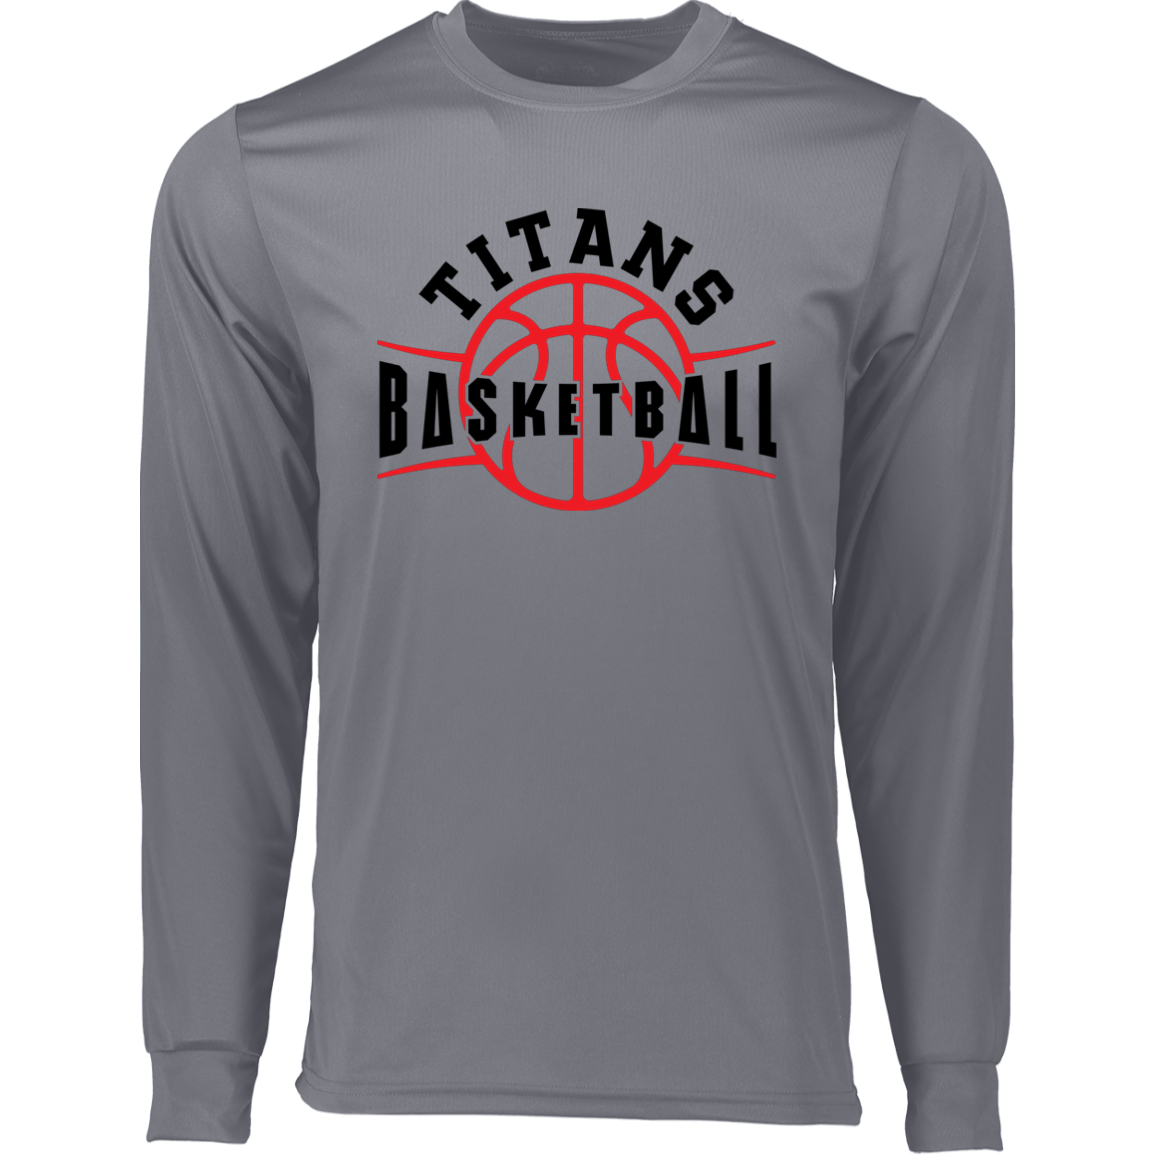 Titans Basketball Long Sleeve Moisture-Wicking Tee